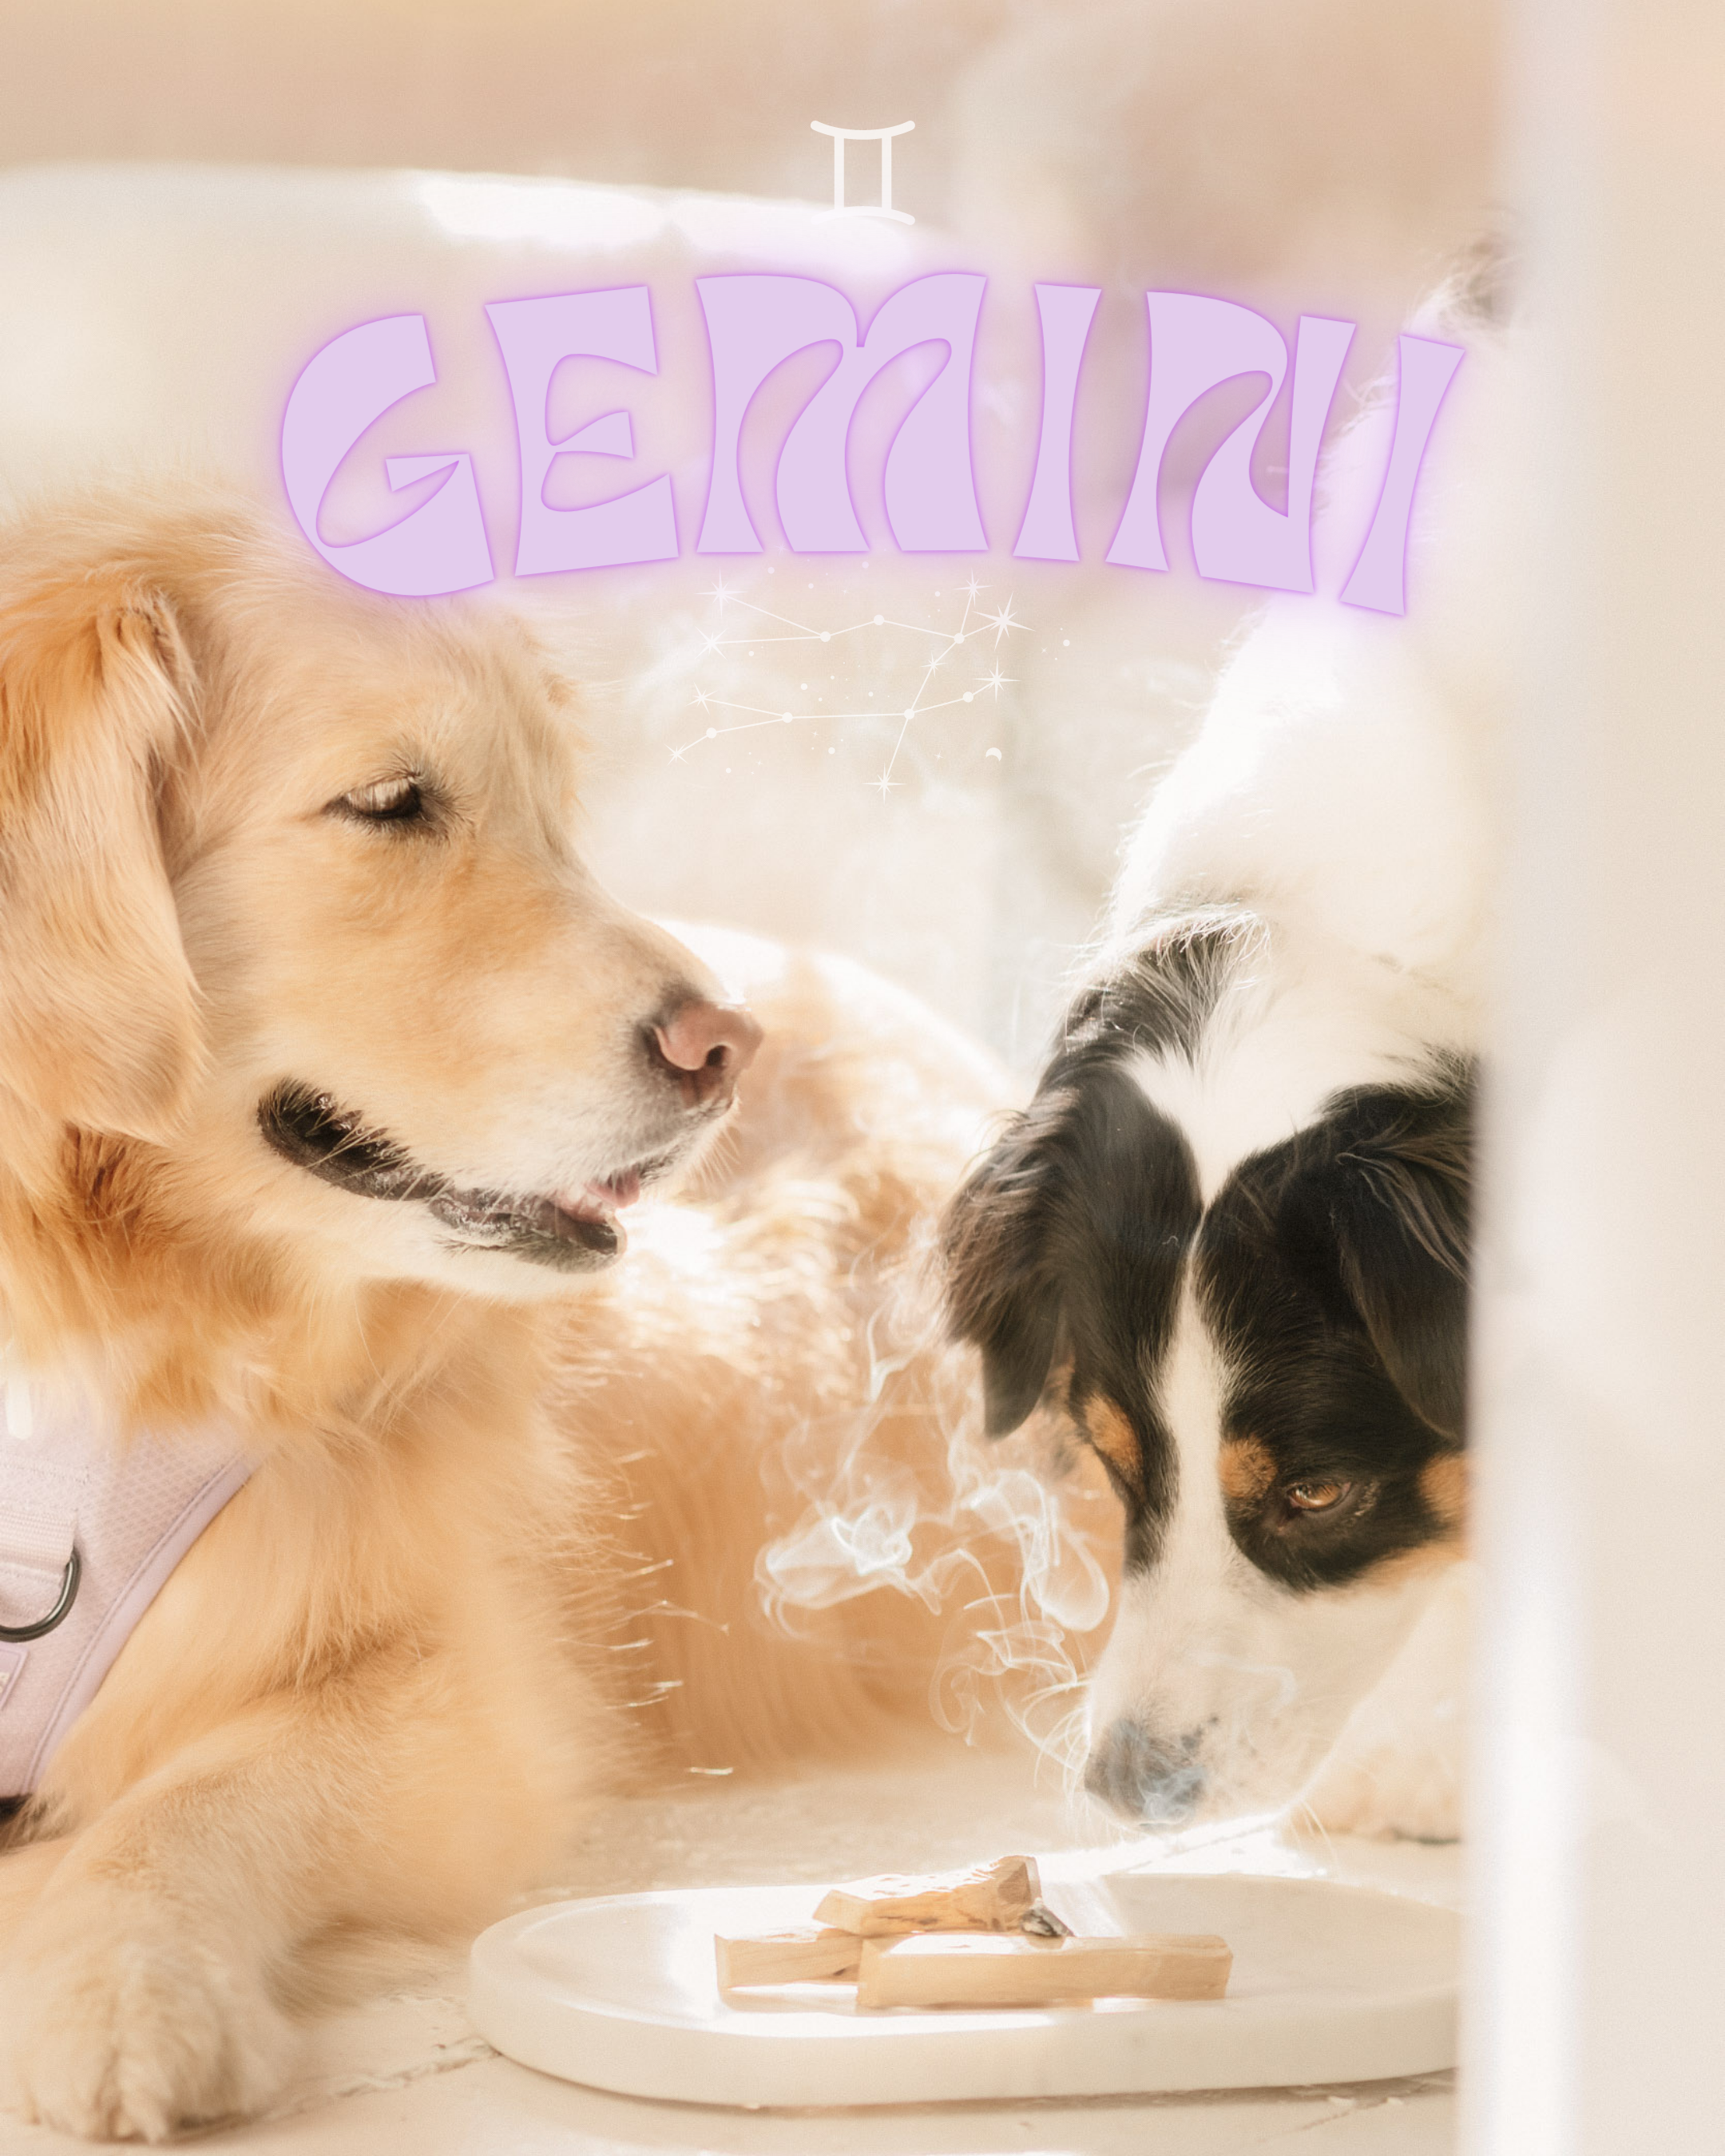 The Gemini Dog: Curiosity Unleashed